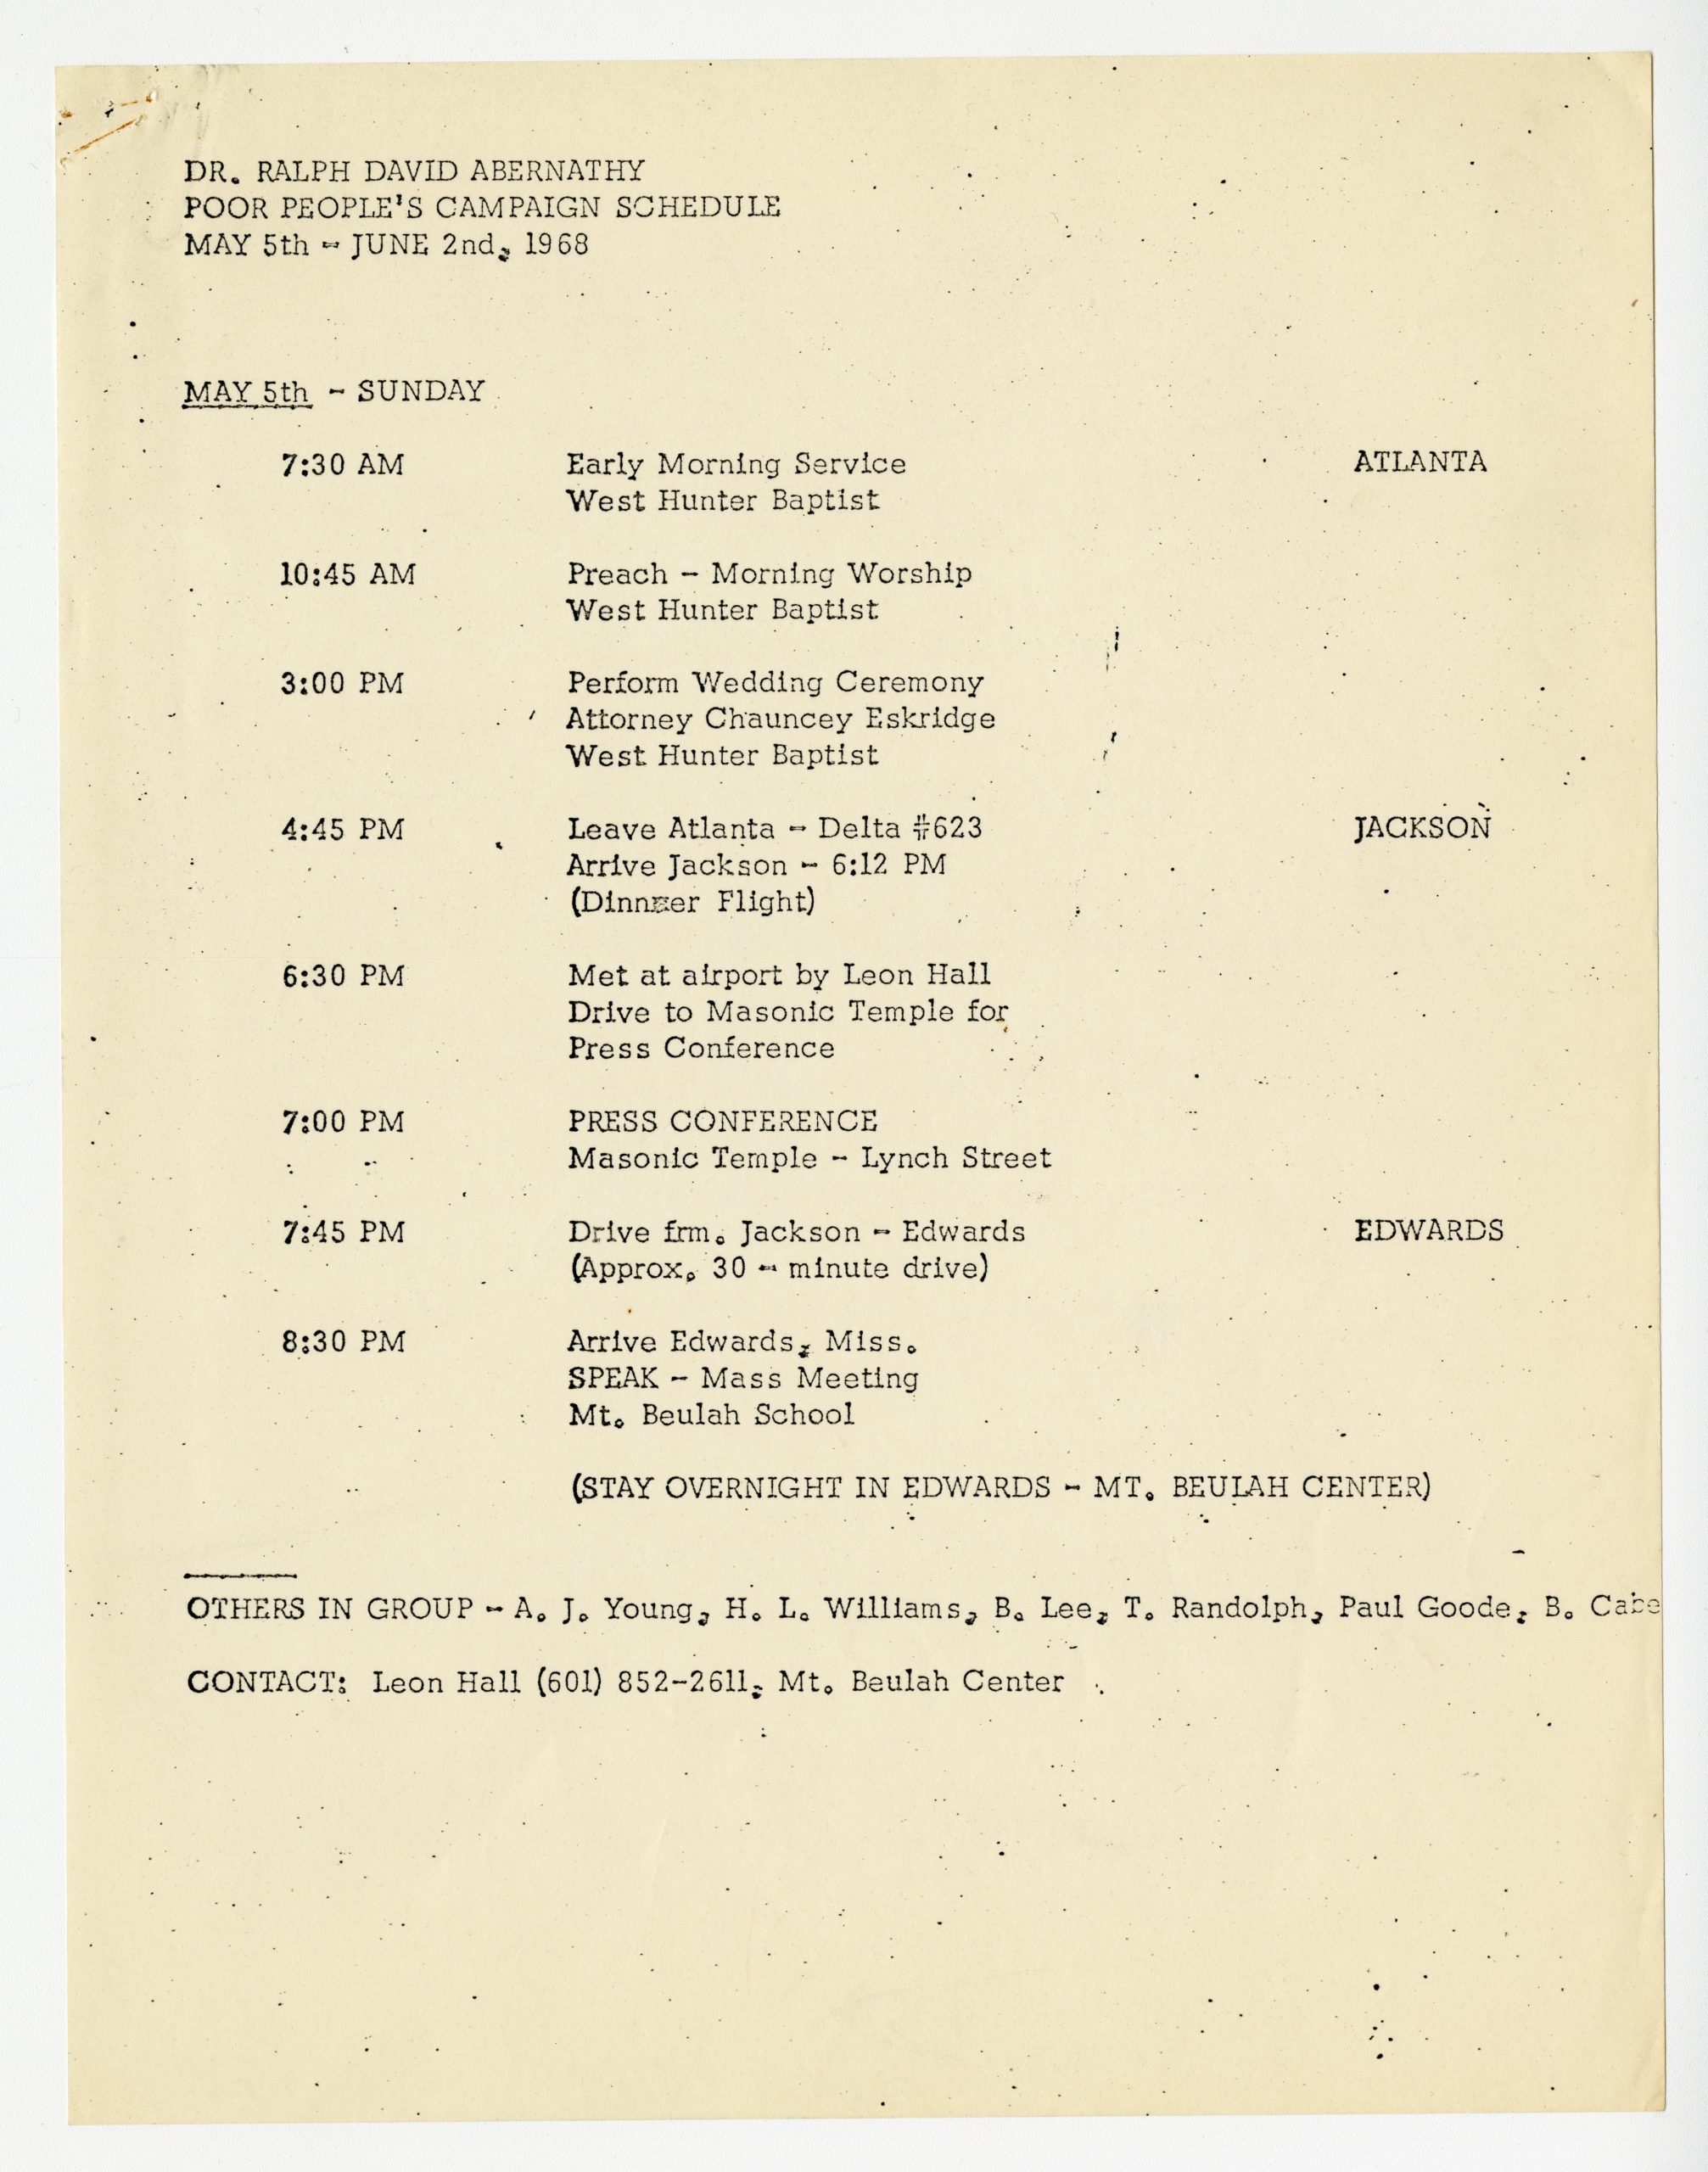 Poor People Campaign schedule May - June 1968